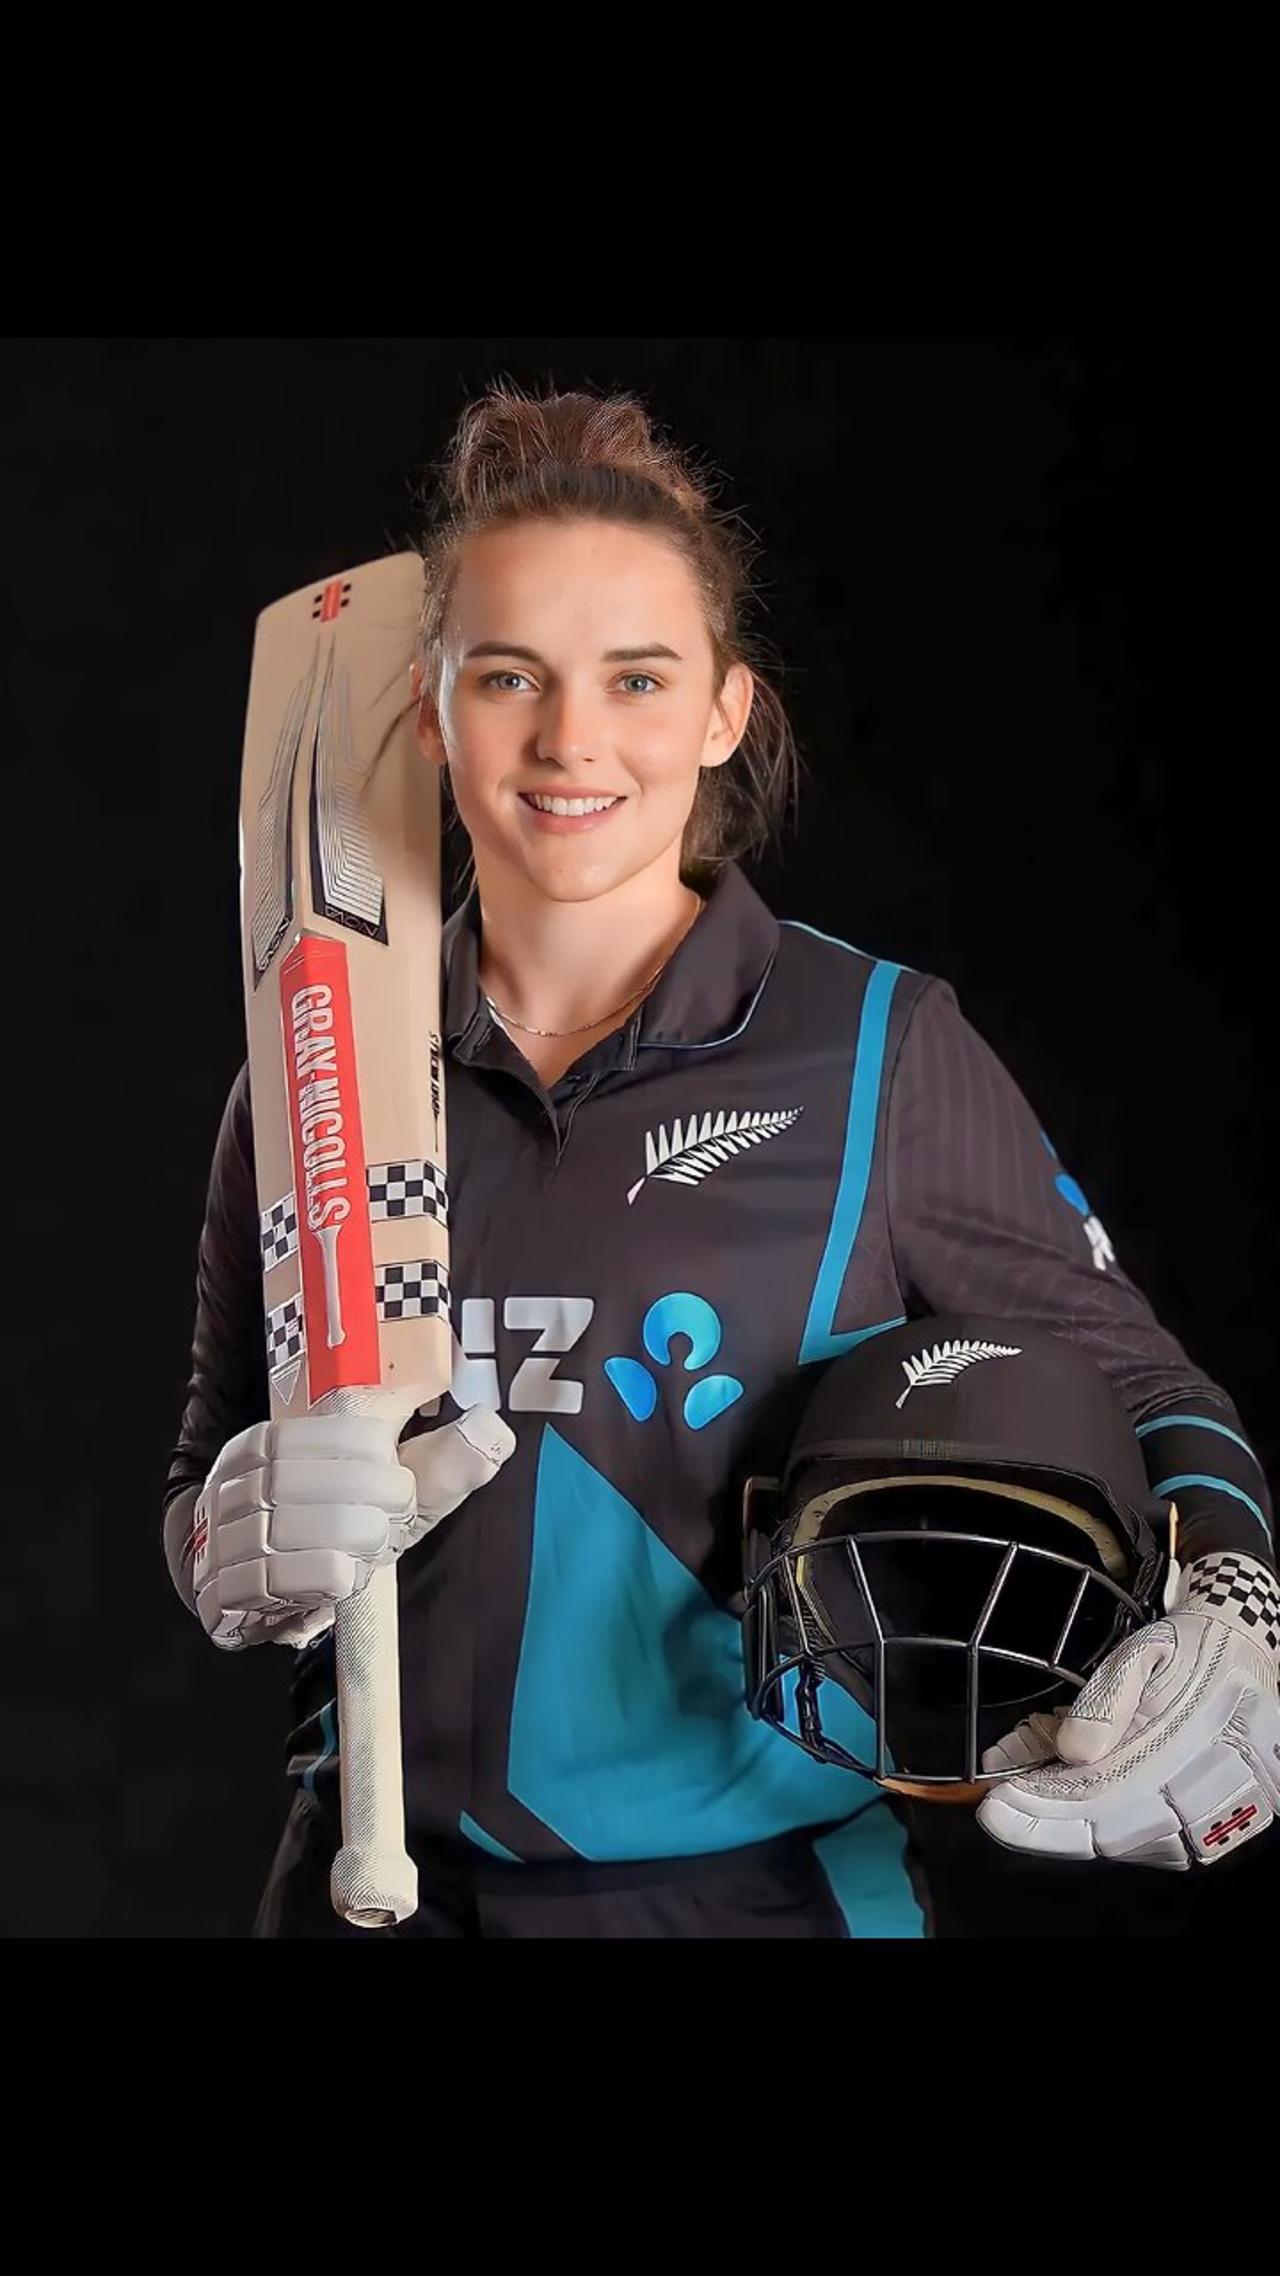 Amelia Kerr (Allrounder) New Zealand #ameliakerr #newzealandcricket #cricketlover #cricket #beautifu